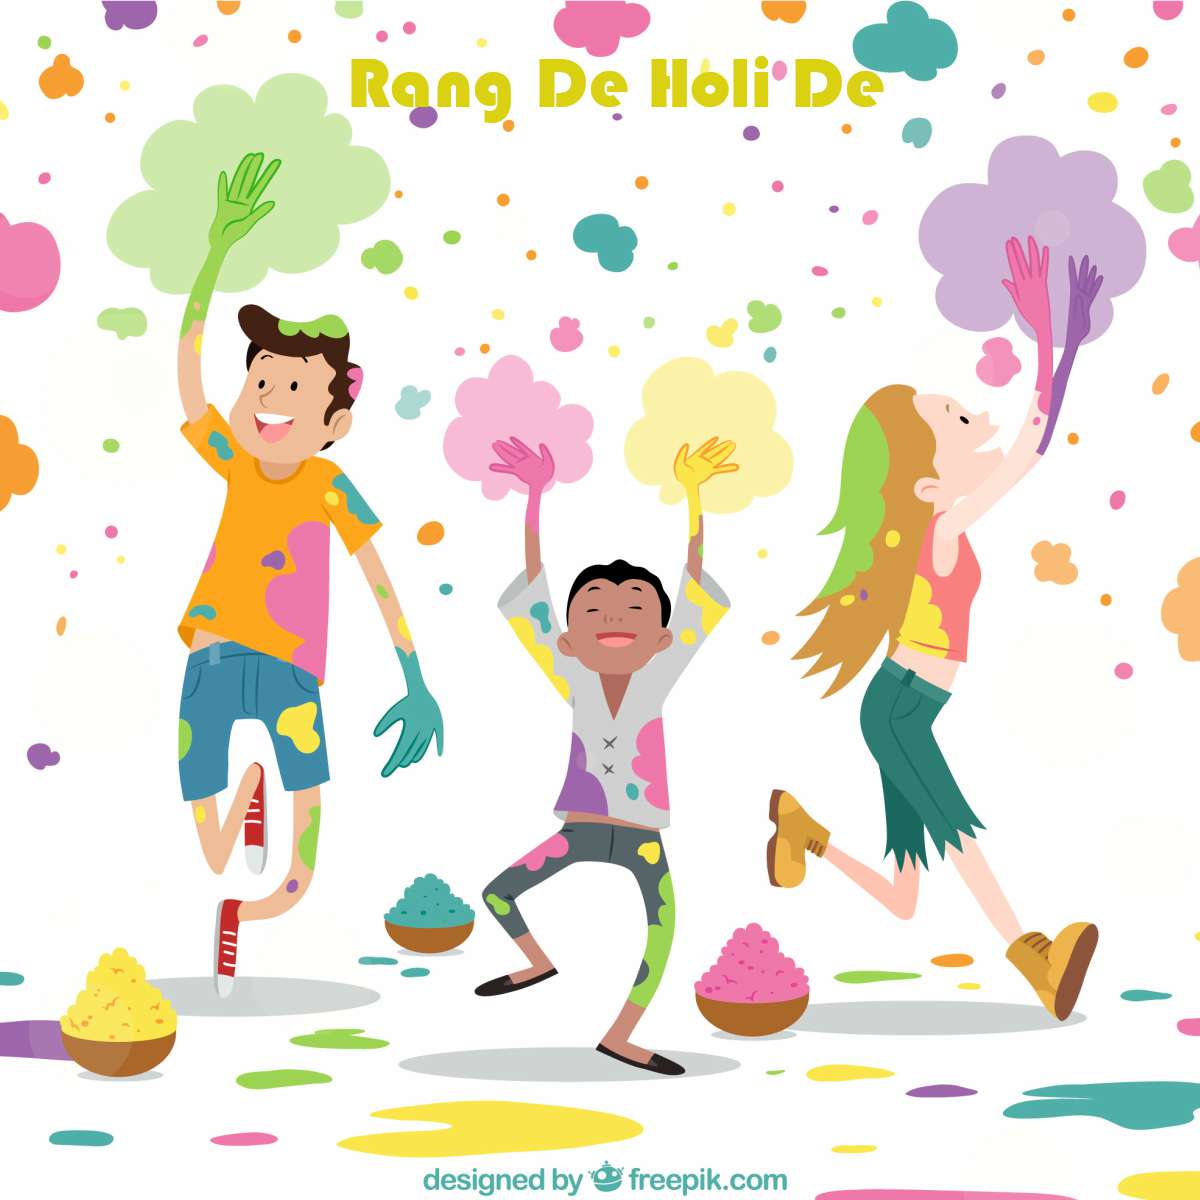 Rang De Holi De - A Festival Of Colours